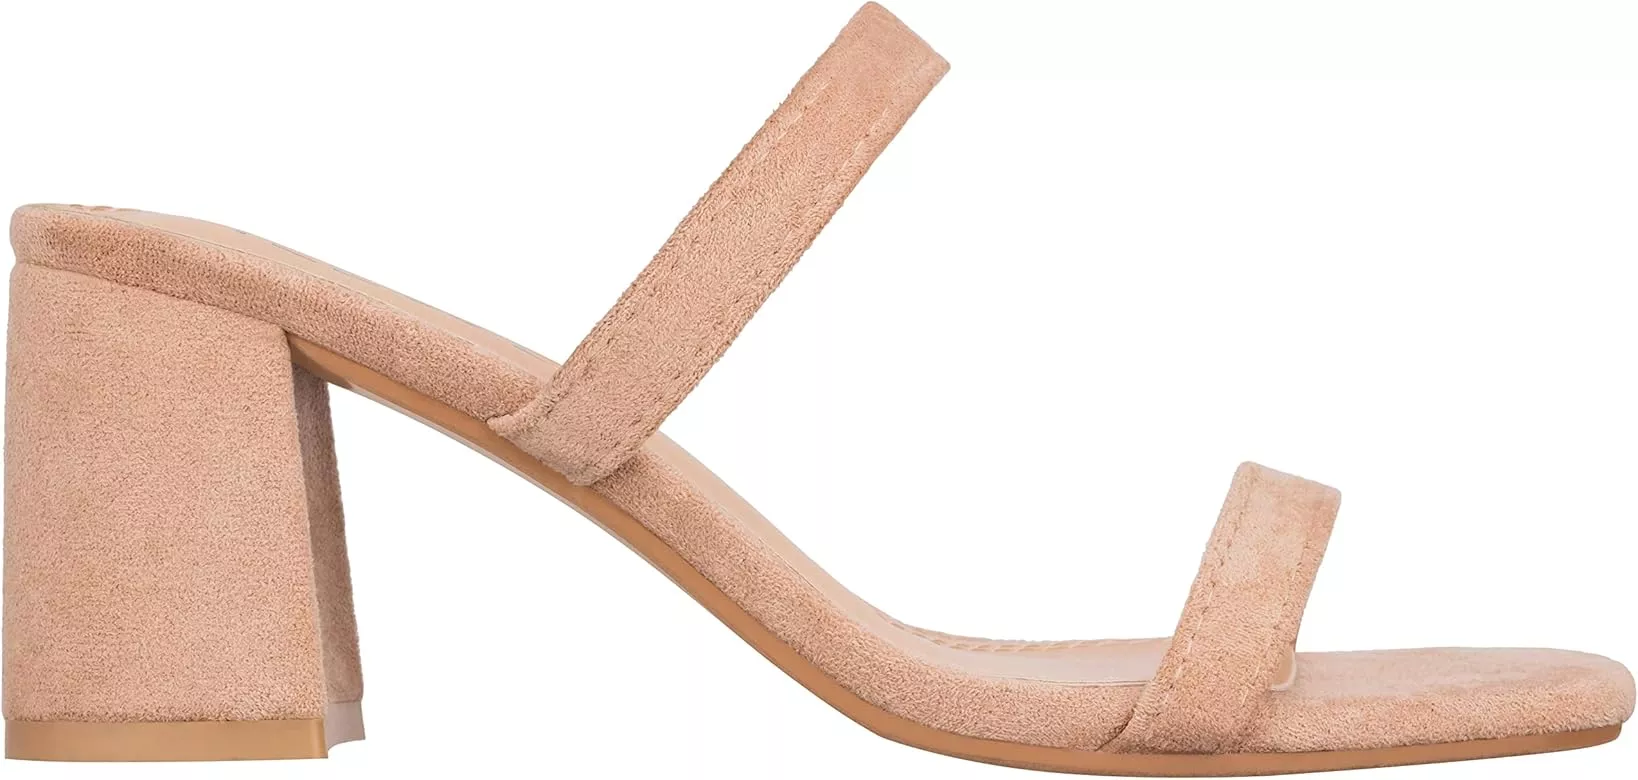 ILLUDE Women's Block Heel Double Band Square Toe